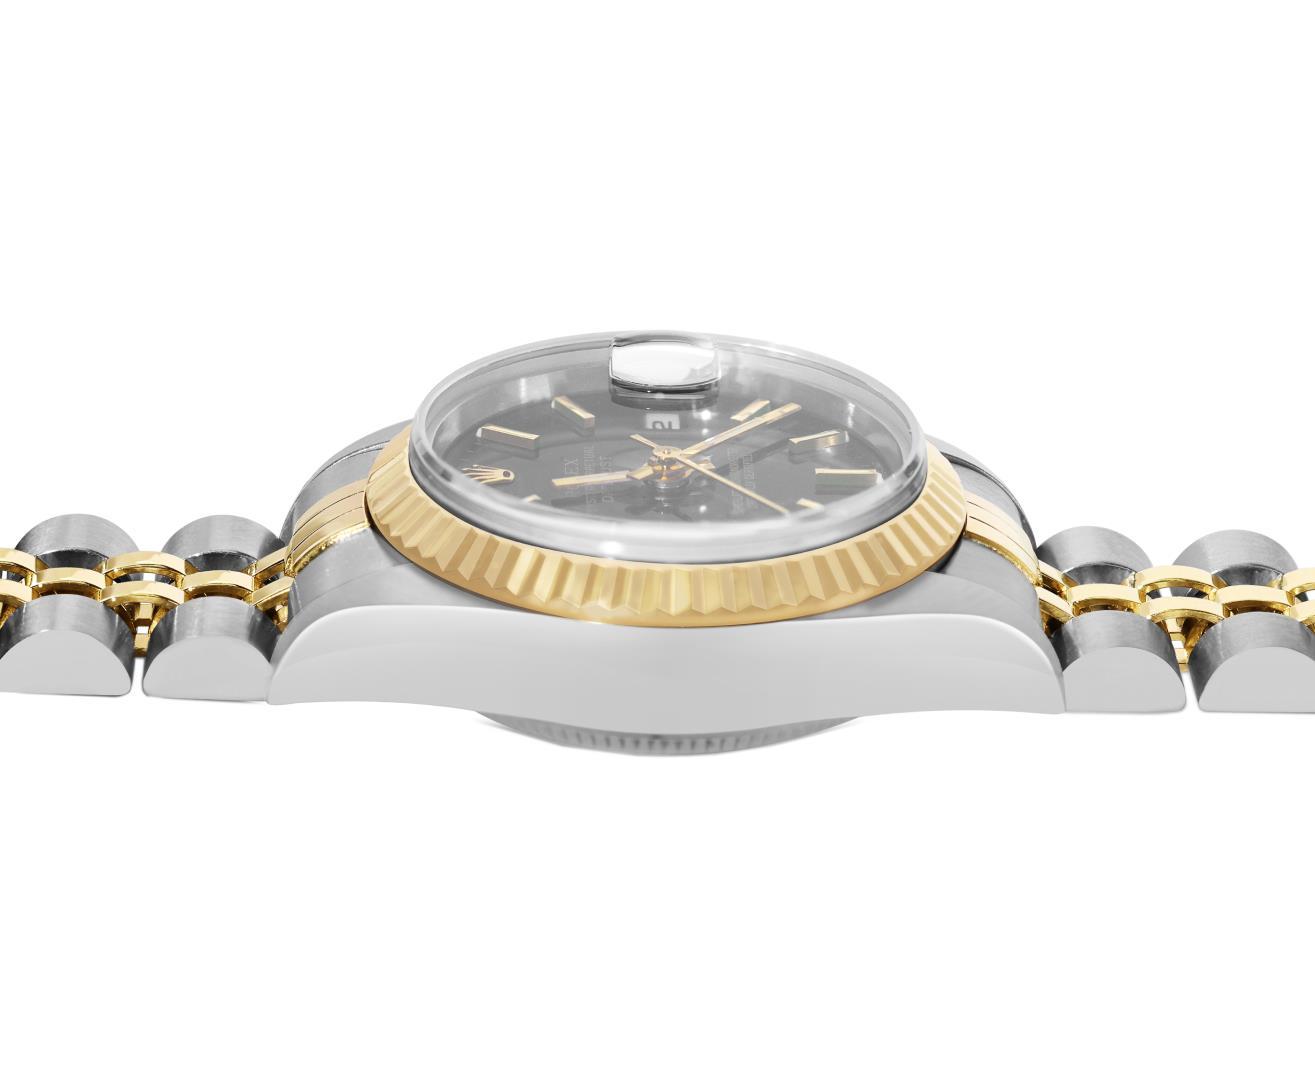 Rolex Ladies Two Tone Black Index Datejust Wristwatch With Rolex Box